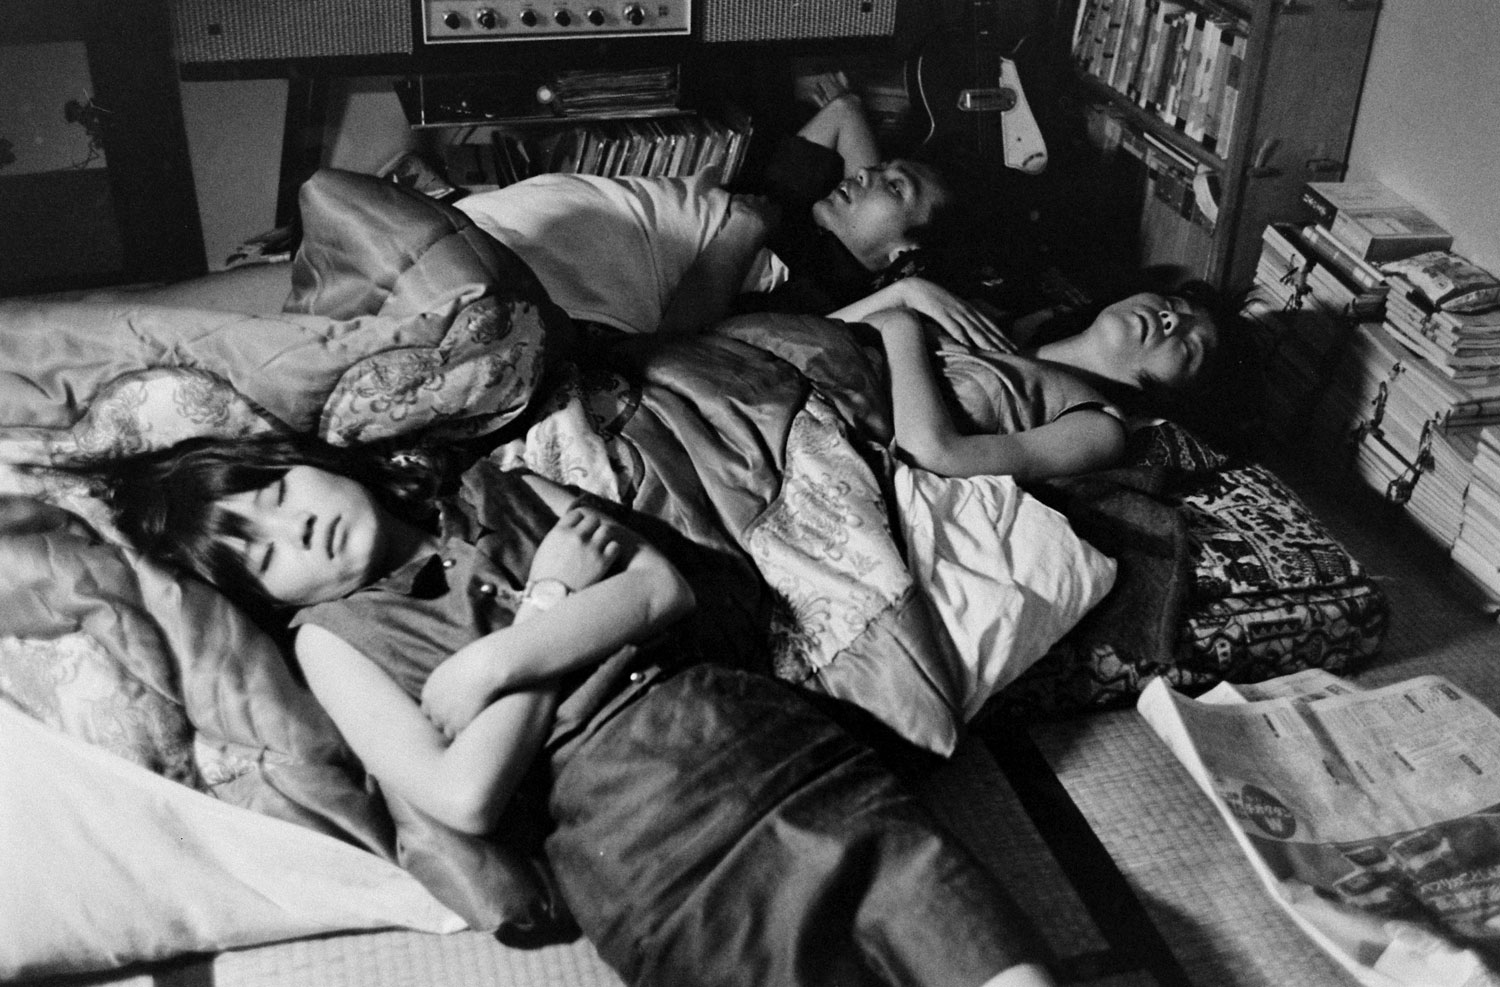 [Yoko] often ends her long nights sprawled on a futon in a friend's room."